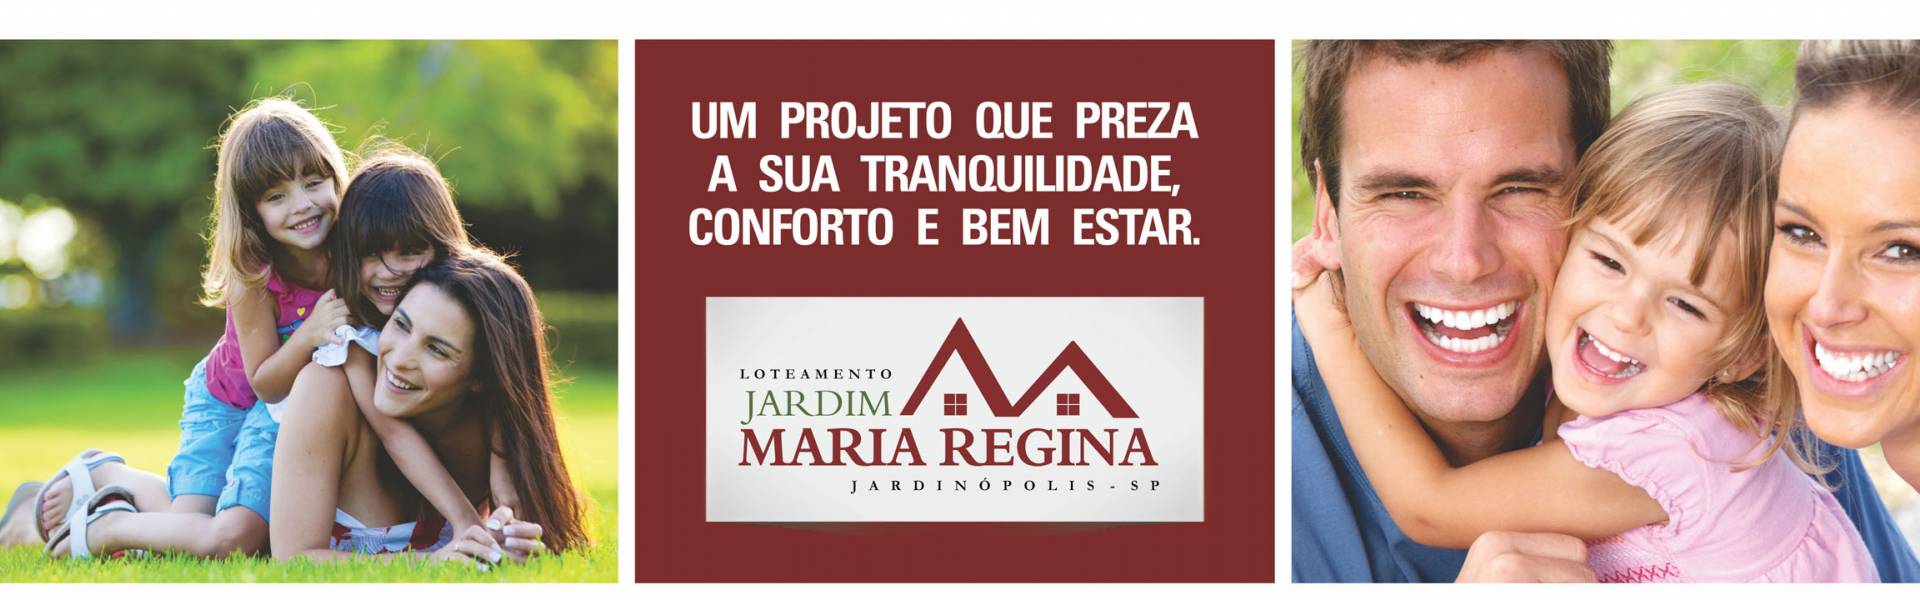 Banner Chamada do imóvel Jardim Maria Regina